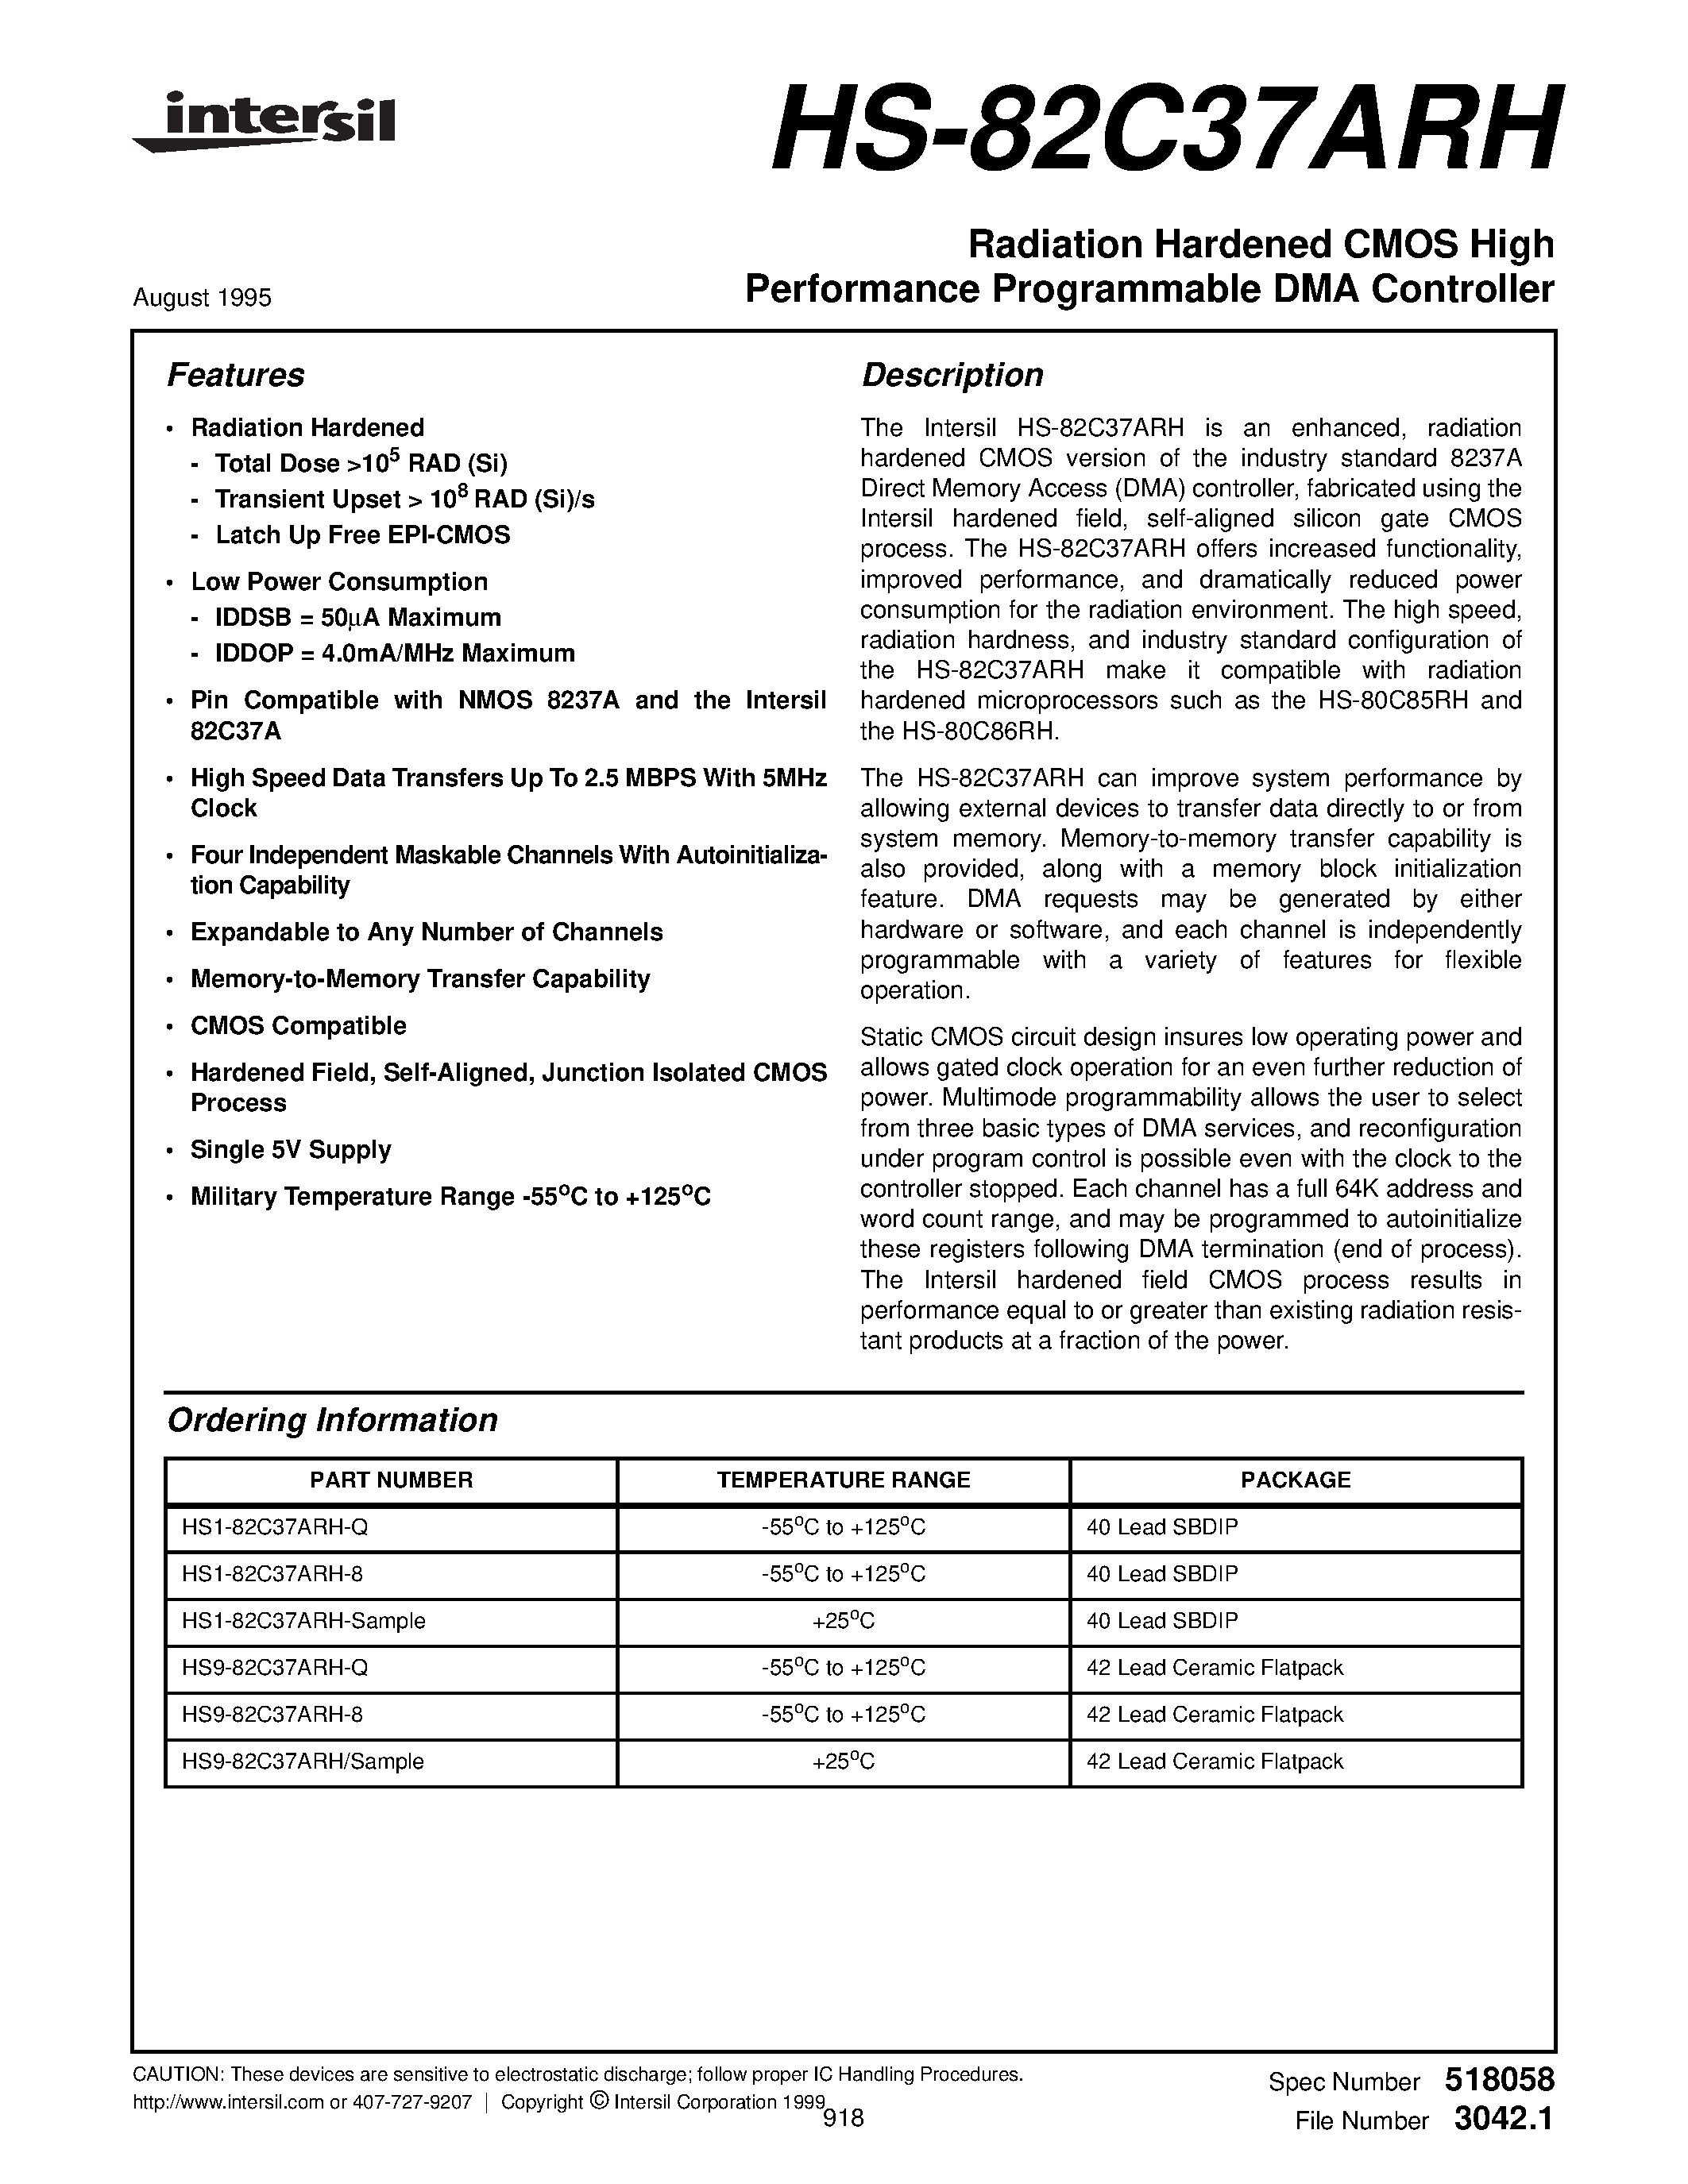 Datasheet HS1-82C37ARH-Q - Radiation Hardened CMOS High Performance Programmable DMA Controller page 1